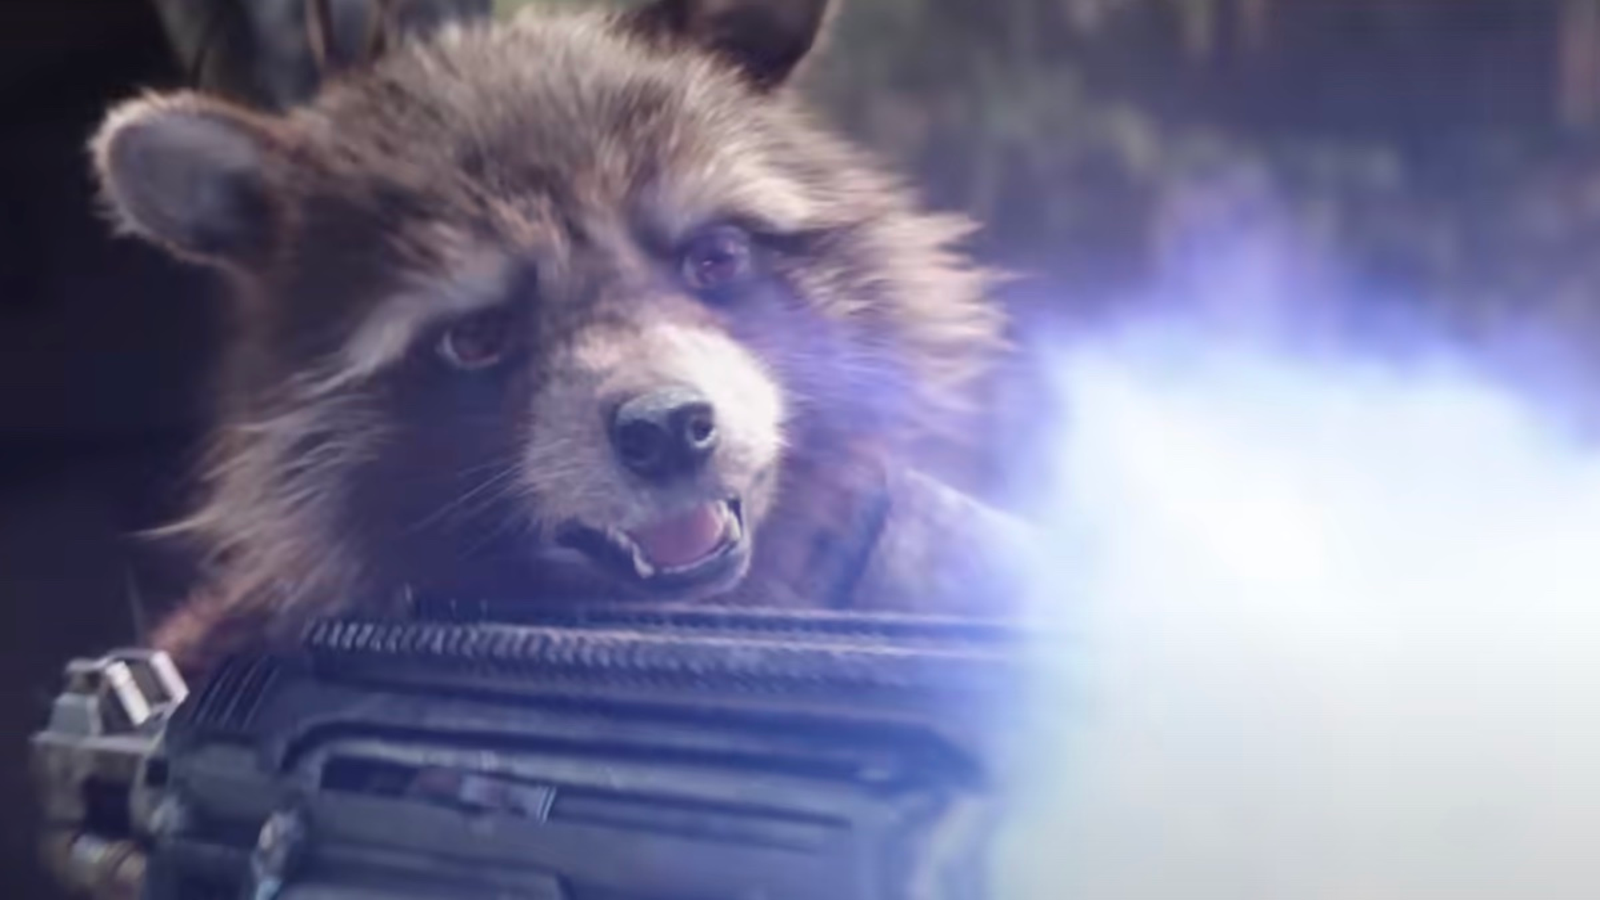 rocket raccoon marvel movie